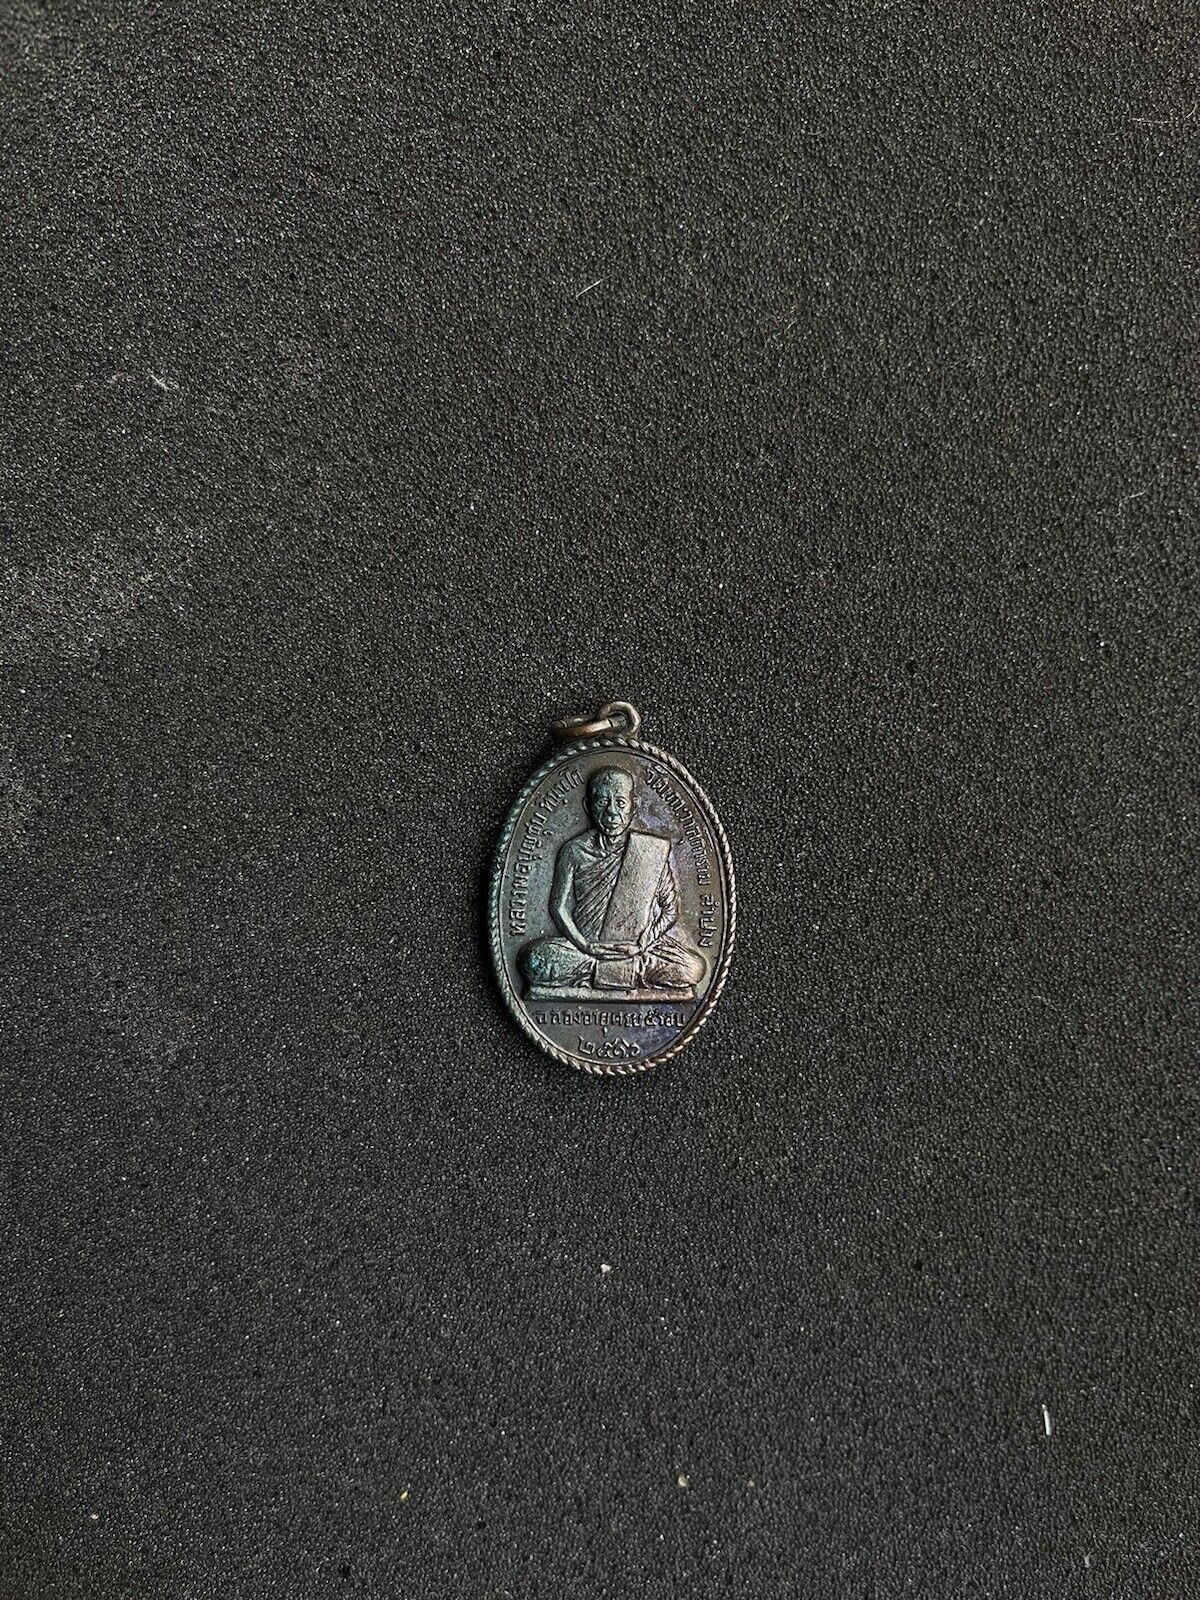 Lp Bunchub Thai Amulet Pendant B.E. 2516 Old Authentic Original Buddhist 2 side